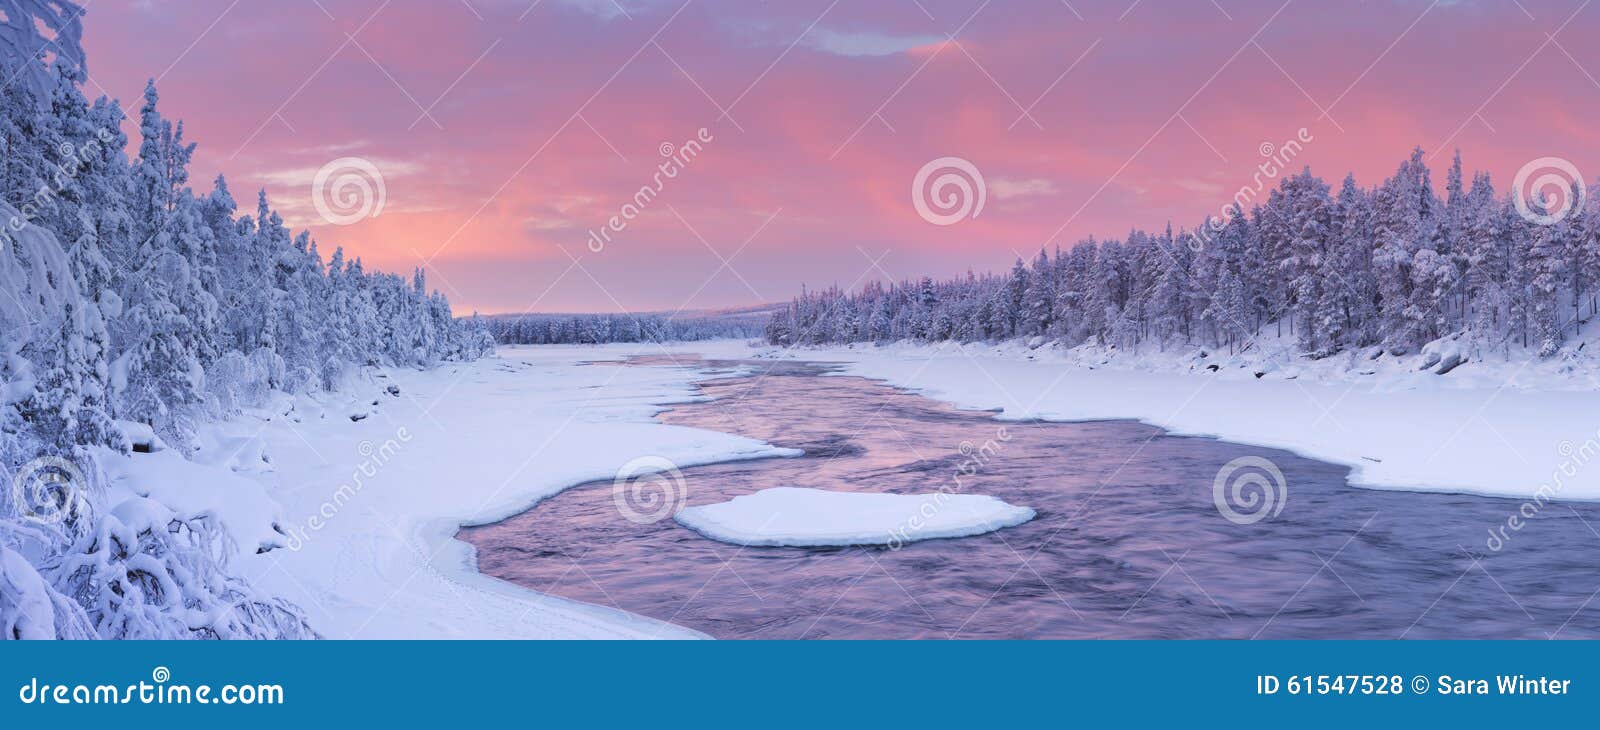 sunrise over a river in a winter landscape, finnish lapland